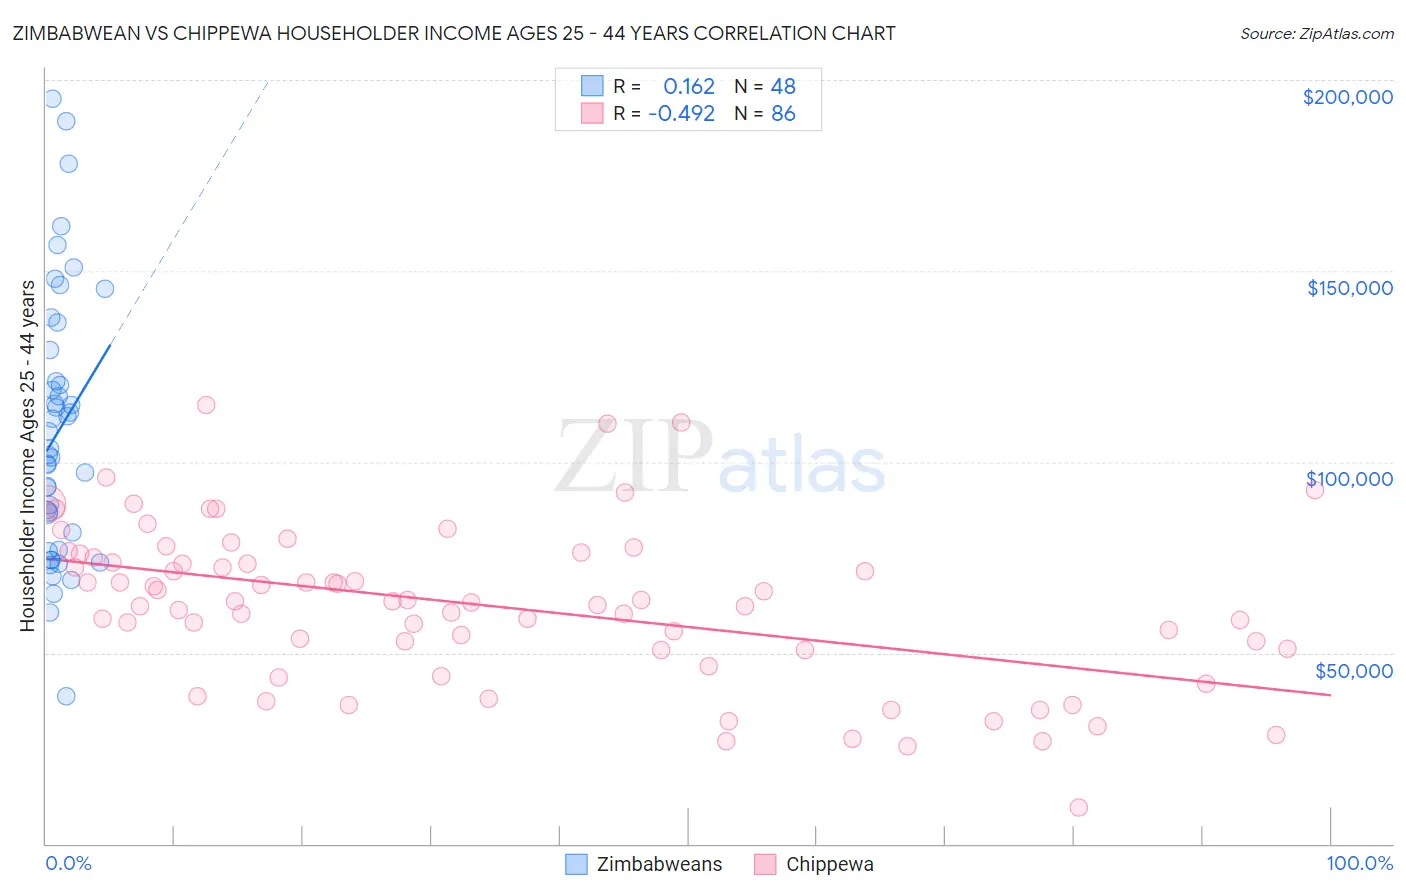 Zimbabwean vs Chippewa Householder Income Ages 25 - 44 years